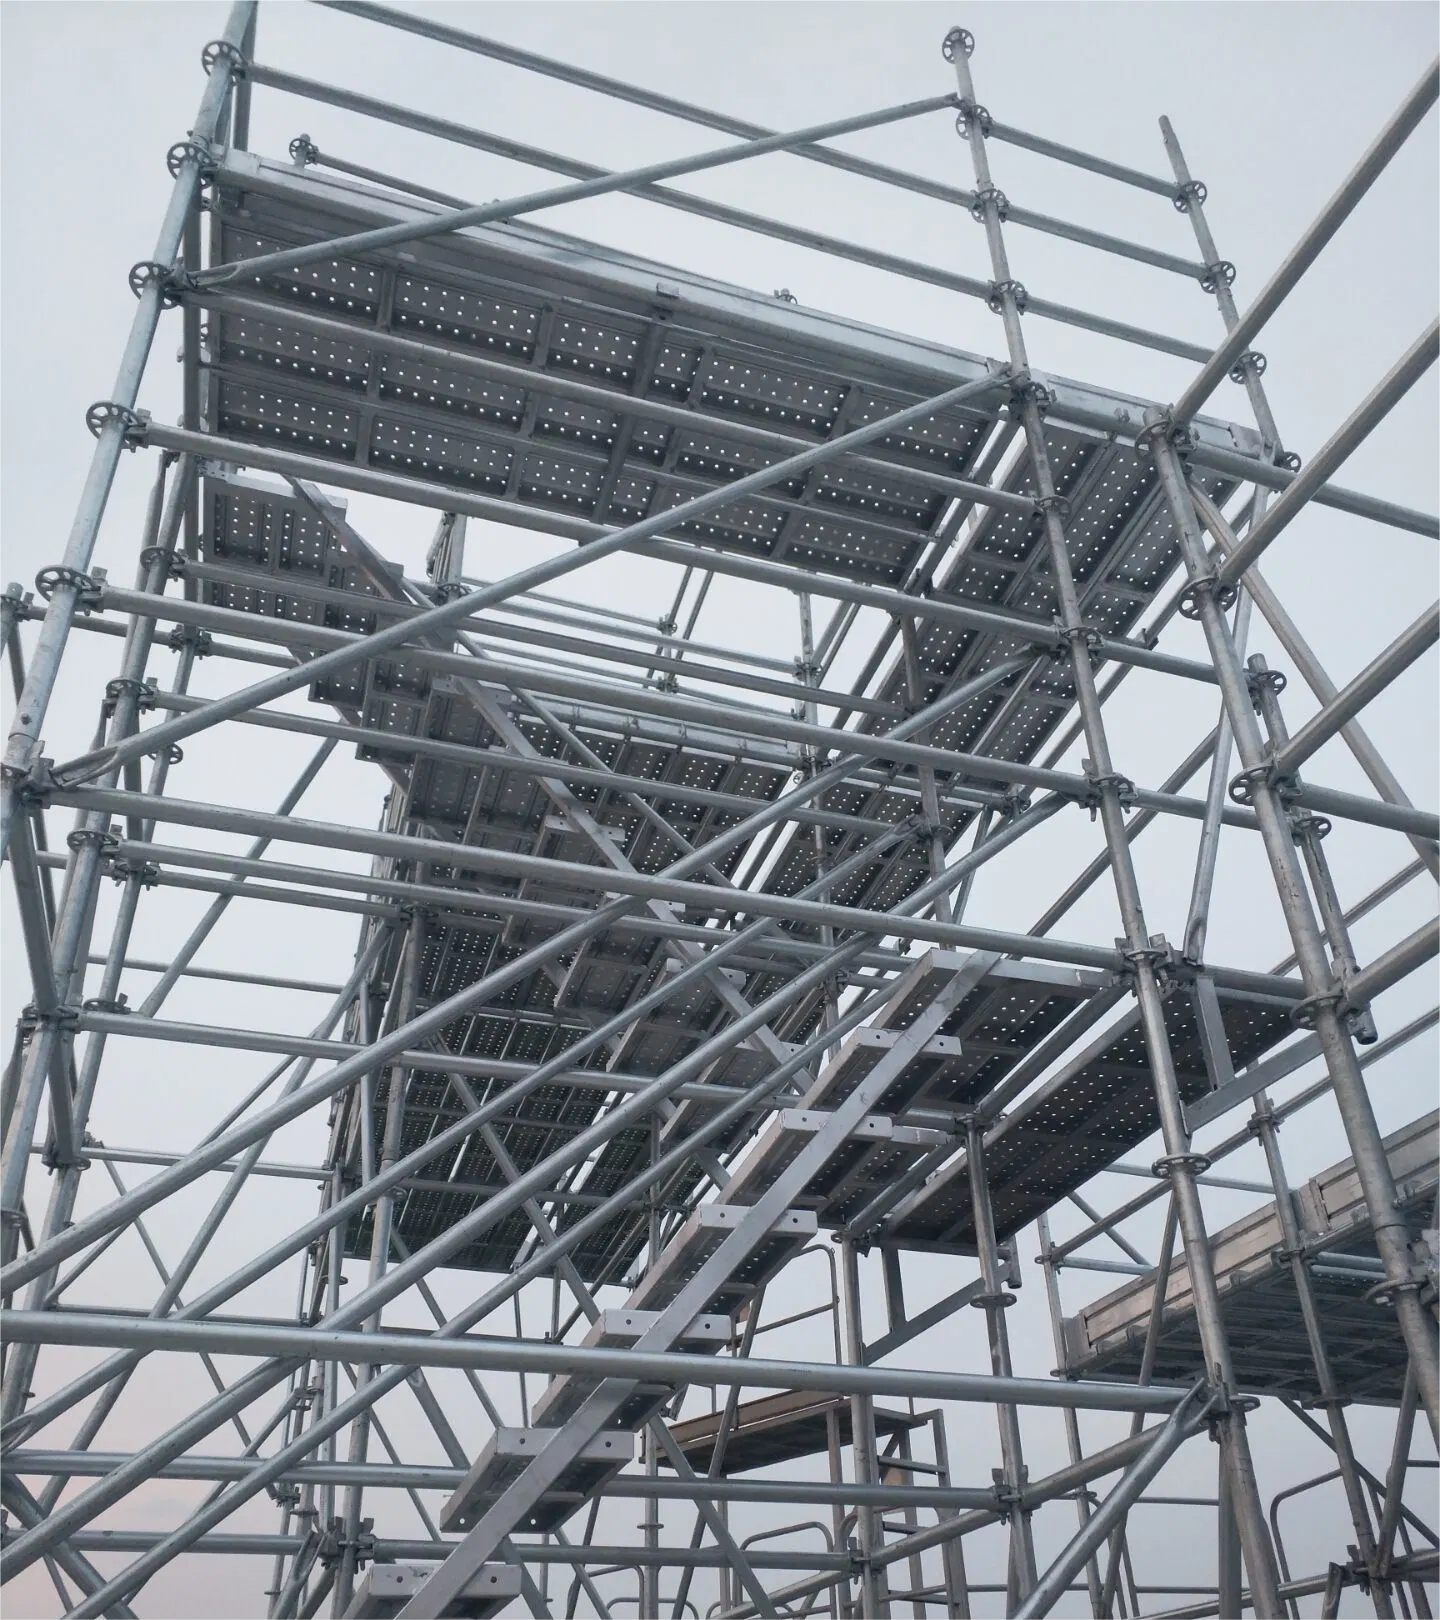 ringlock scaffolding system